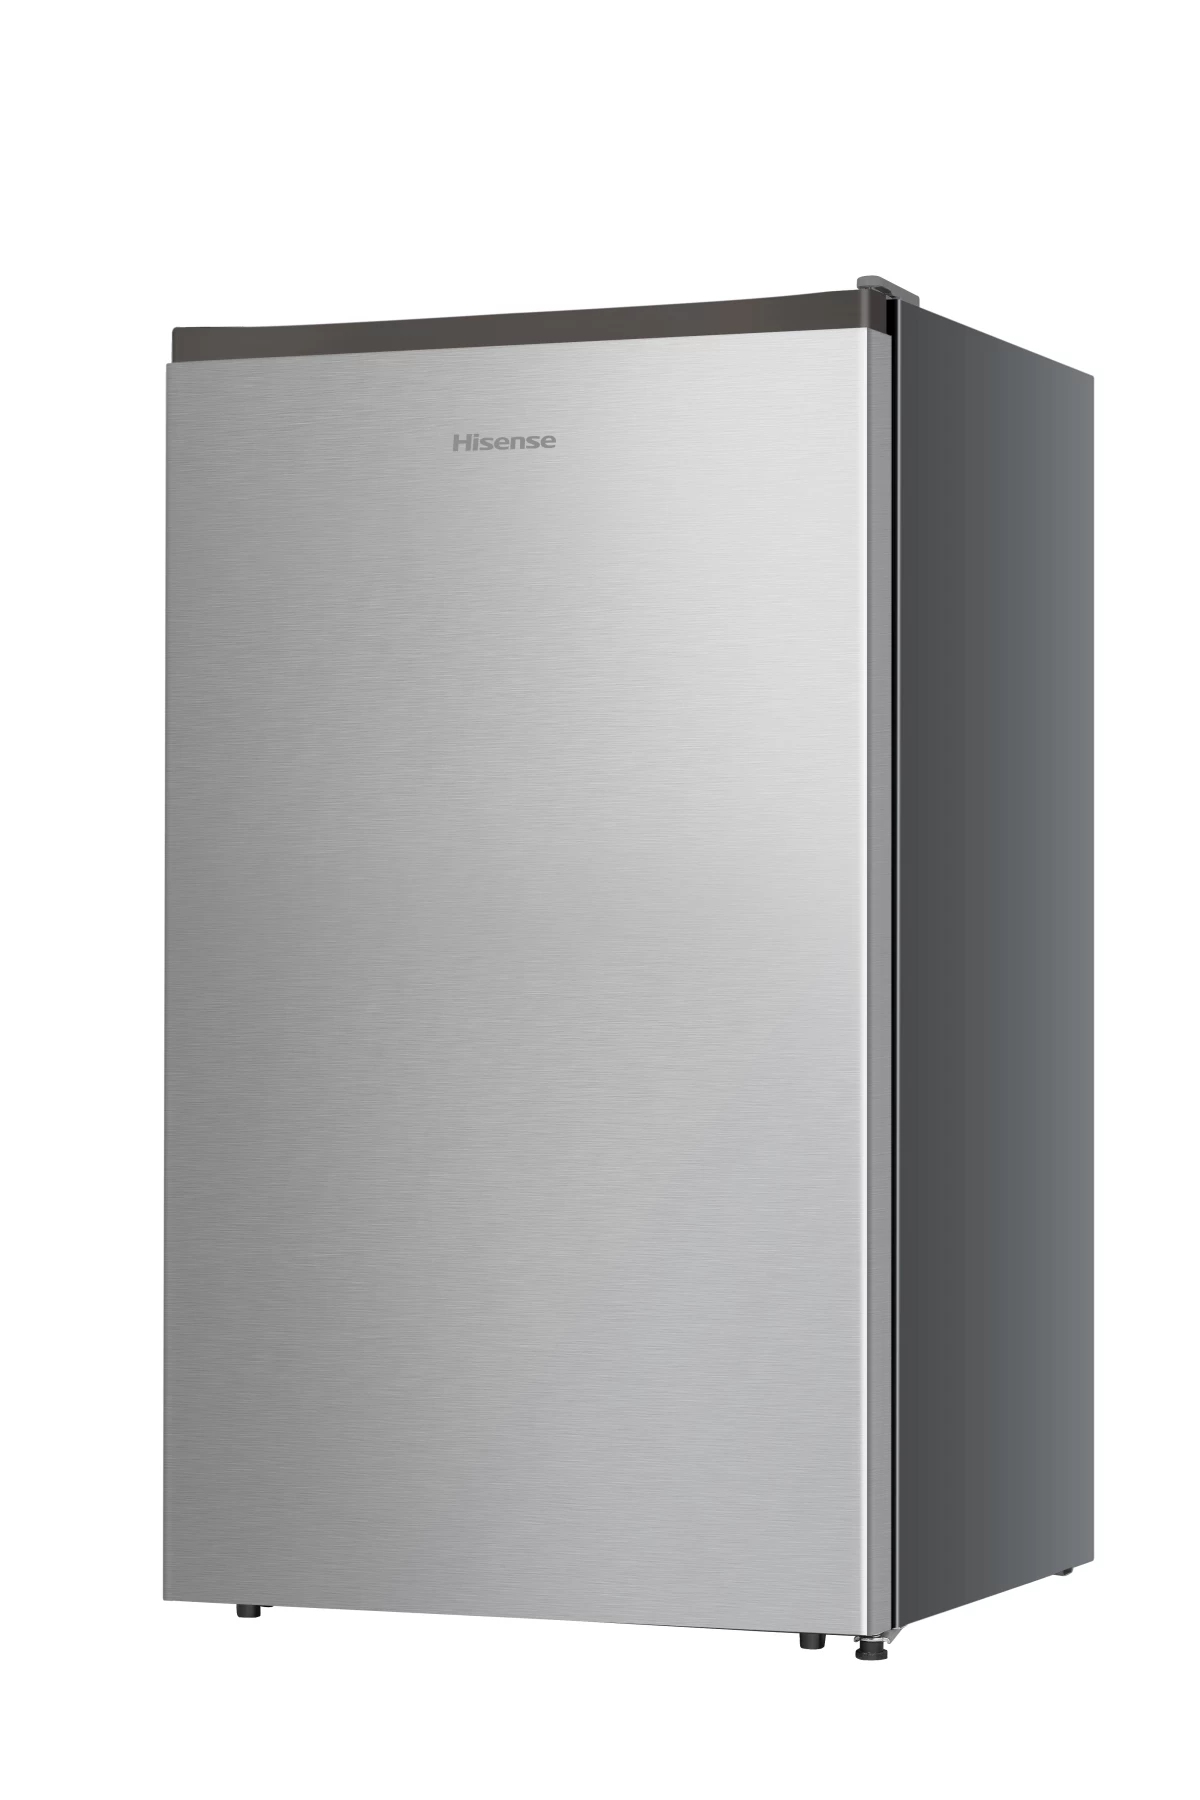 Hisense 121L Single Door Refrigerator 121DR